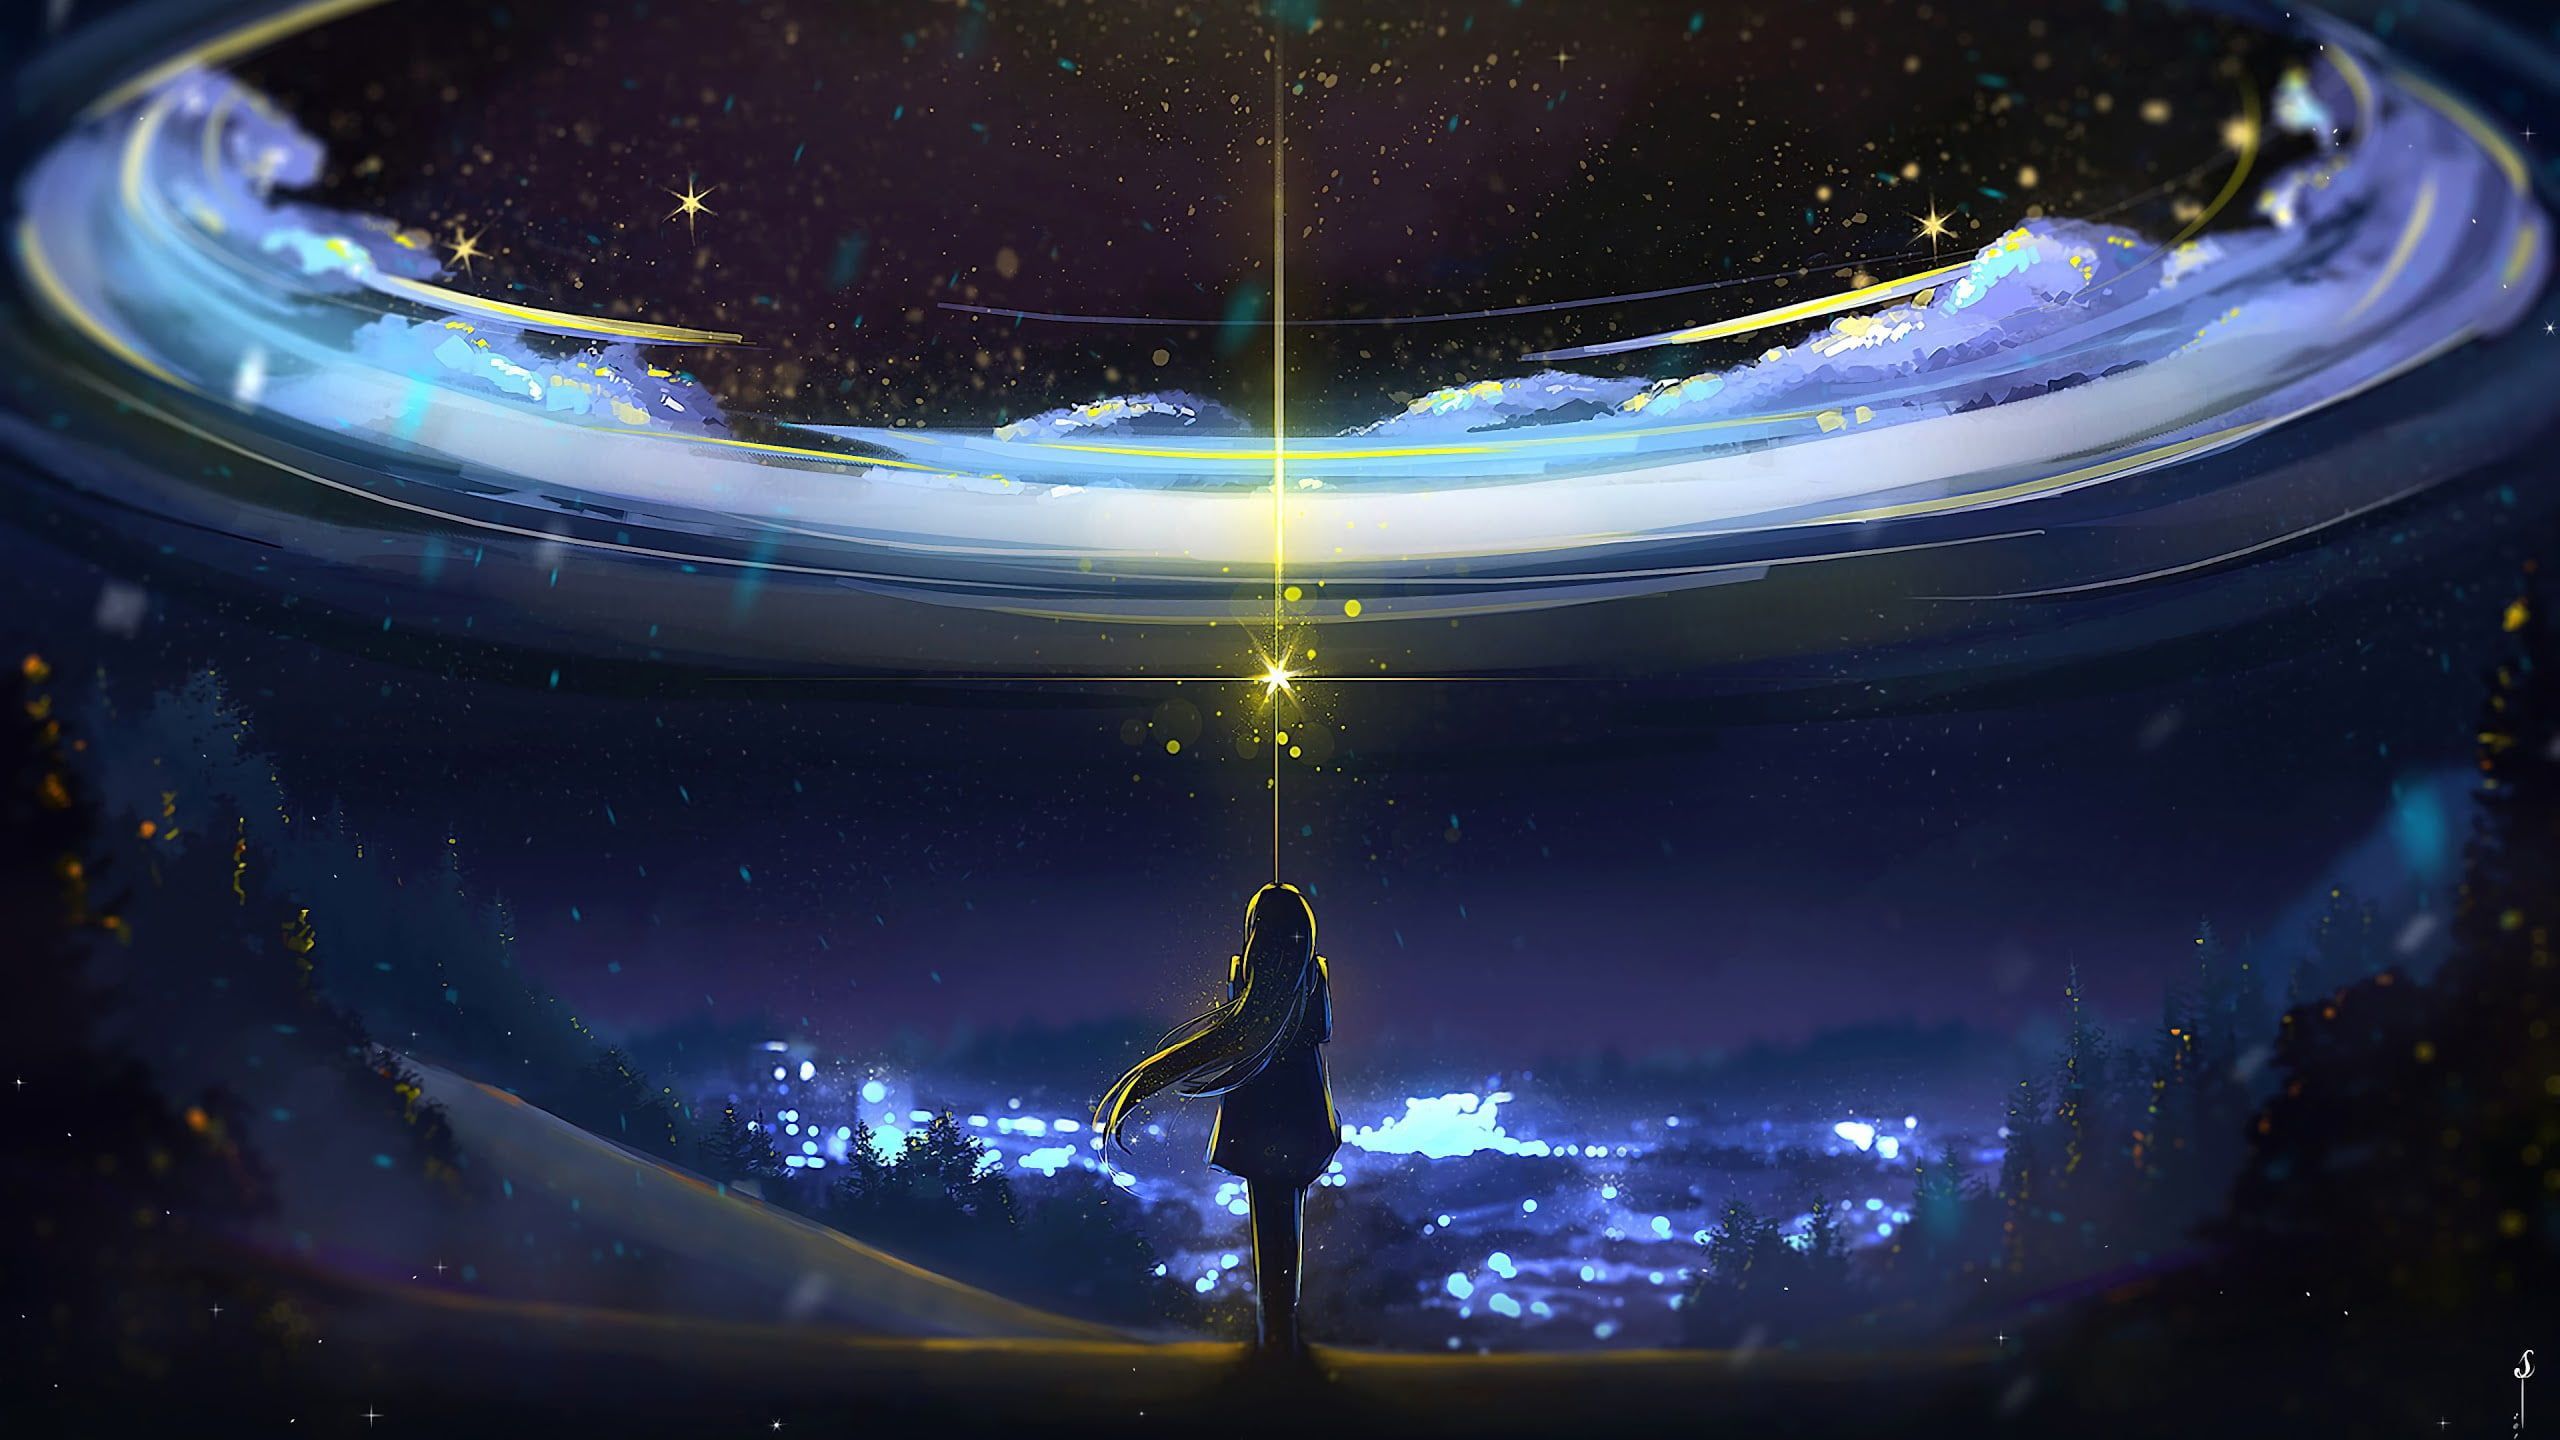 Sky #Anime #Night #Scenery K #wallpaper #hdwallpaper #desktop. Sky anime, Anime scenery, Night scenery